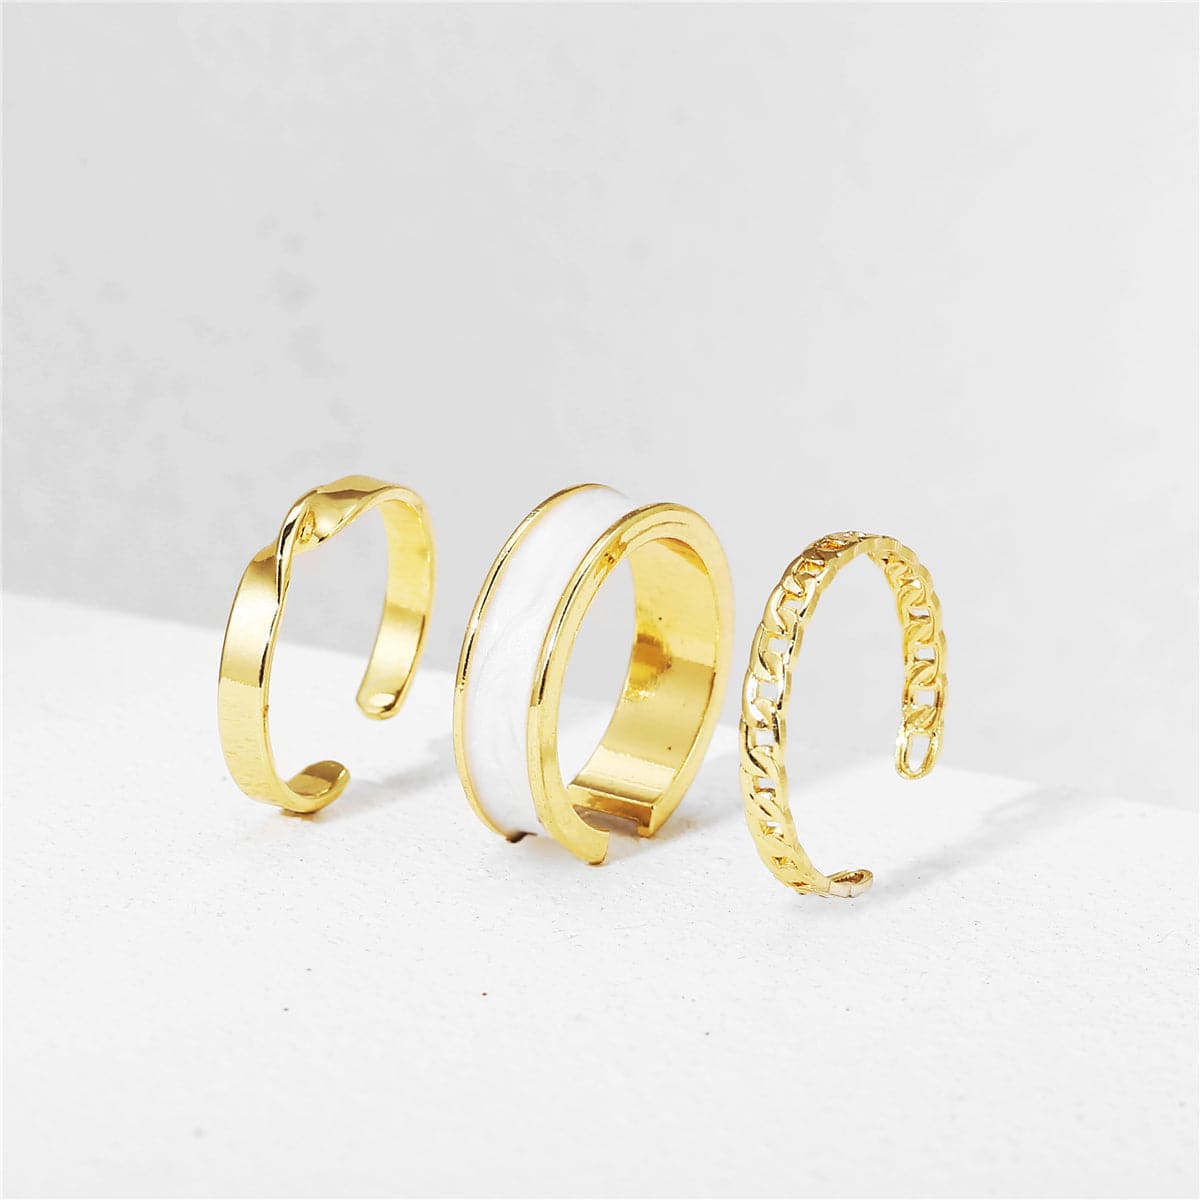 Enamel & 18K Gold-Plated Open Ring Set